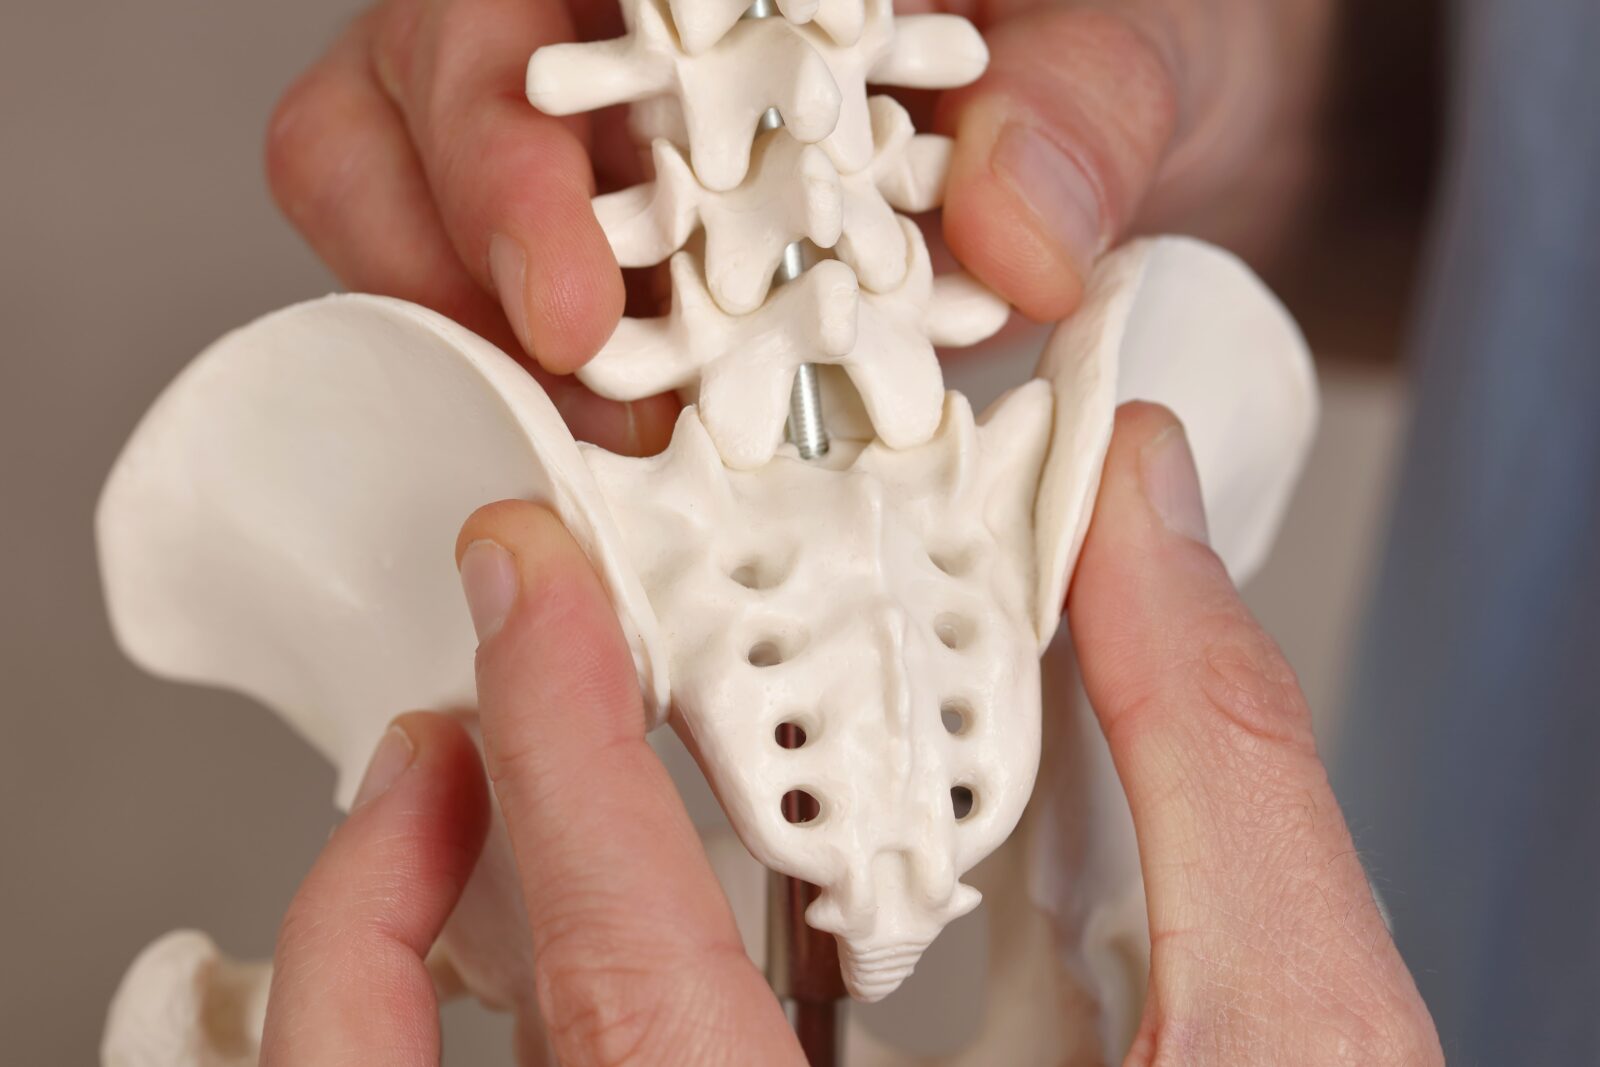 Tailbone Pain Explained: Causes, Symptoms & Treatment